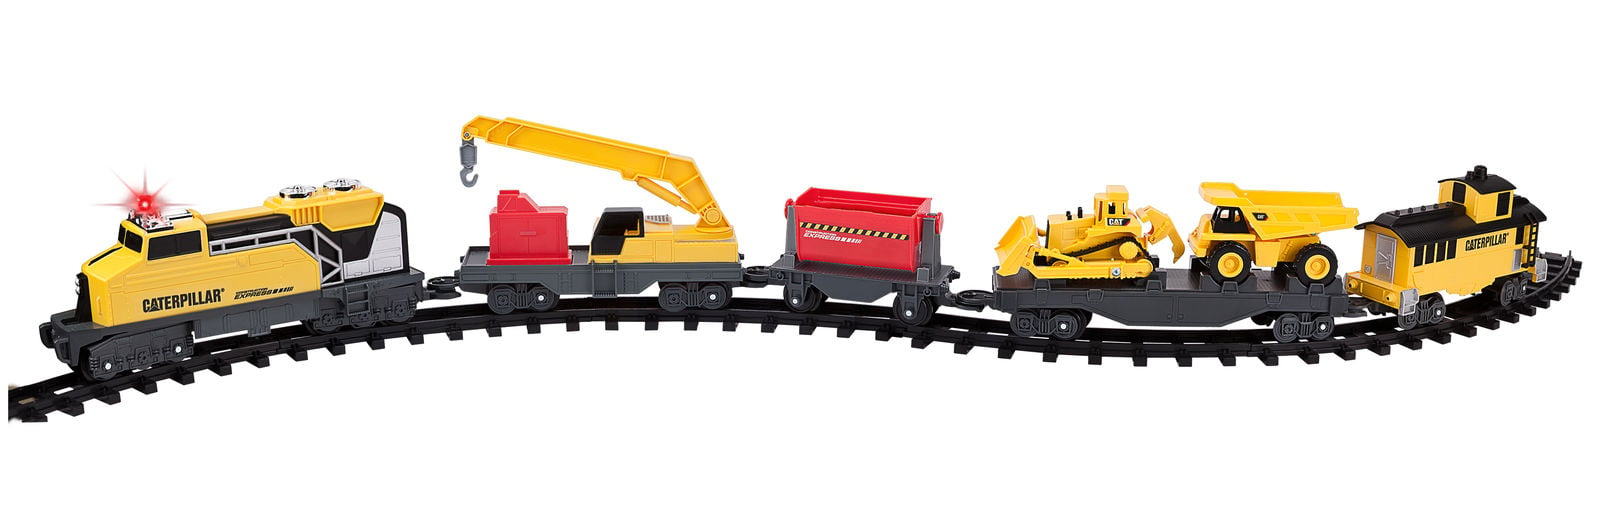 caterpillar construction express train set